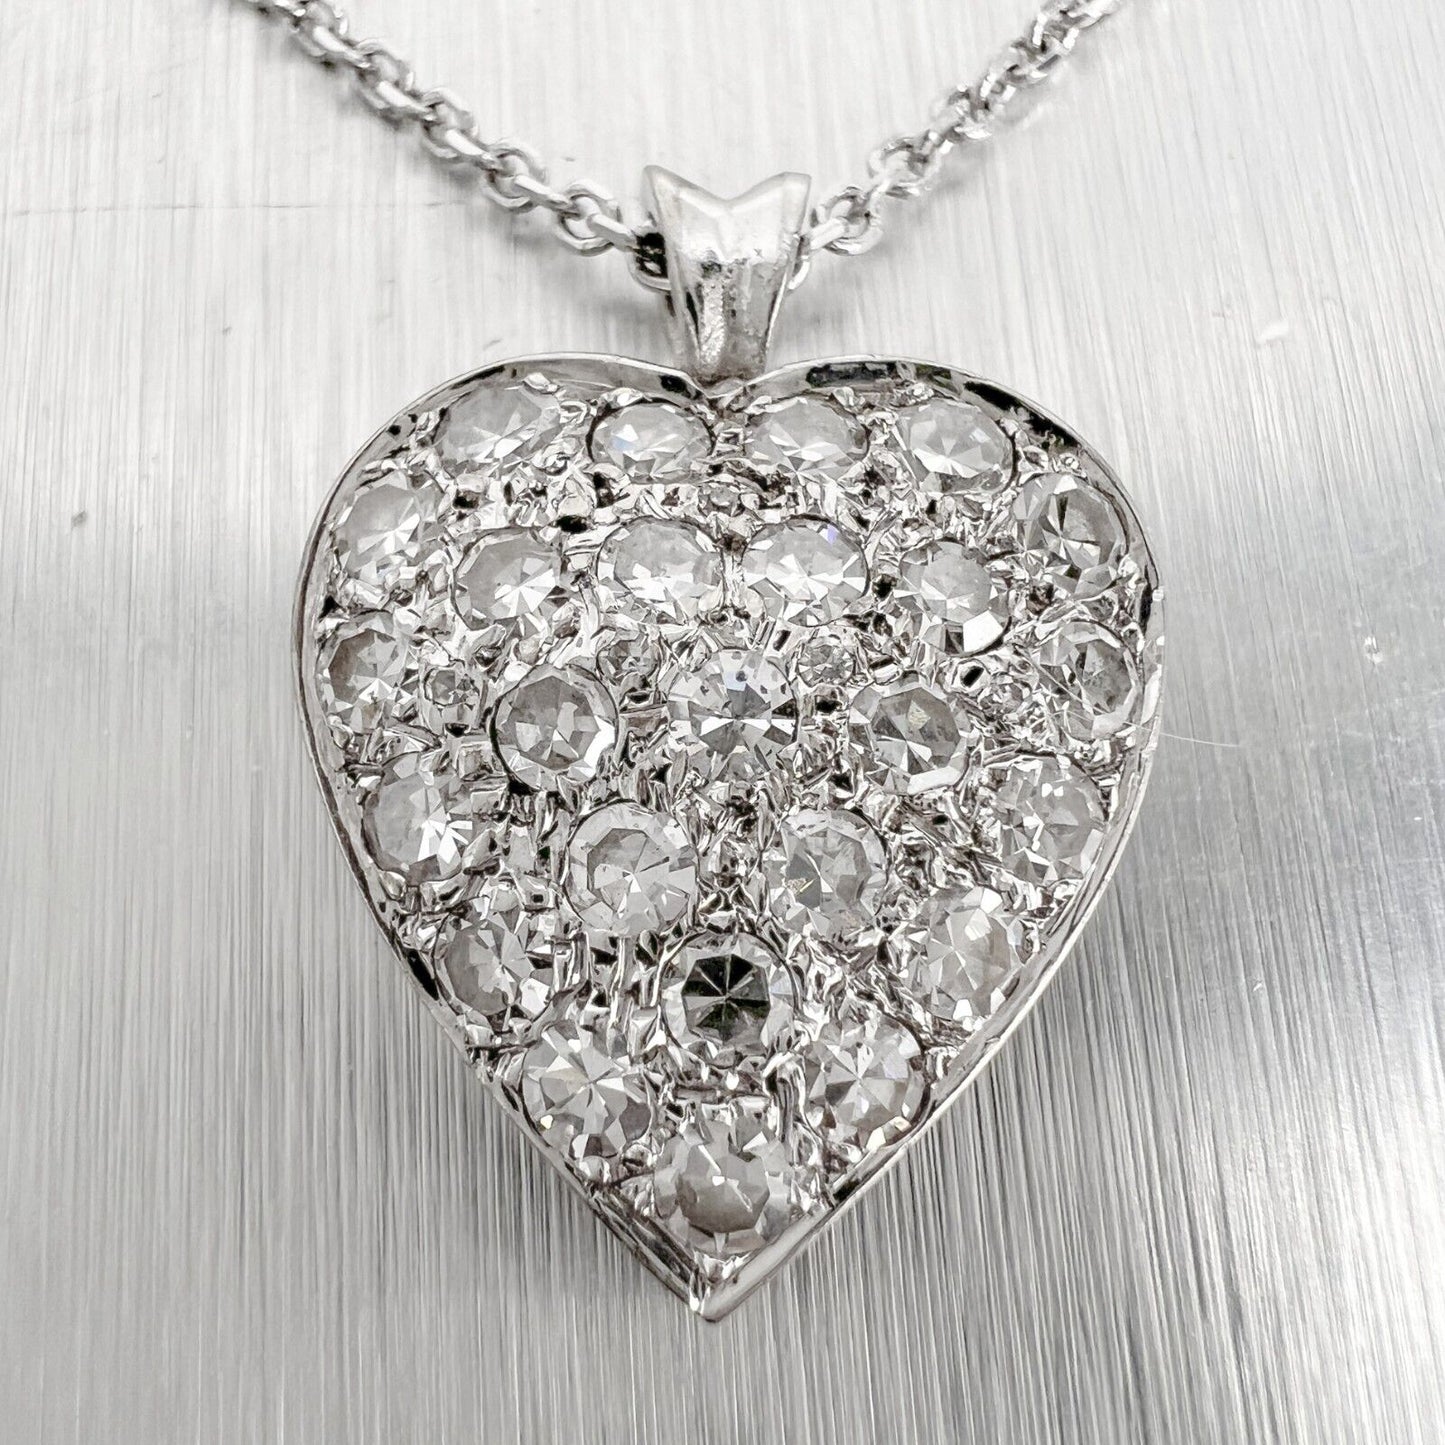 14k White Gold Single Cut Diamond Pave Heart Pendant Necklace 0.45ctw 16"